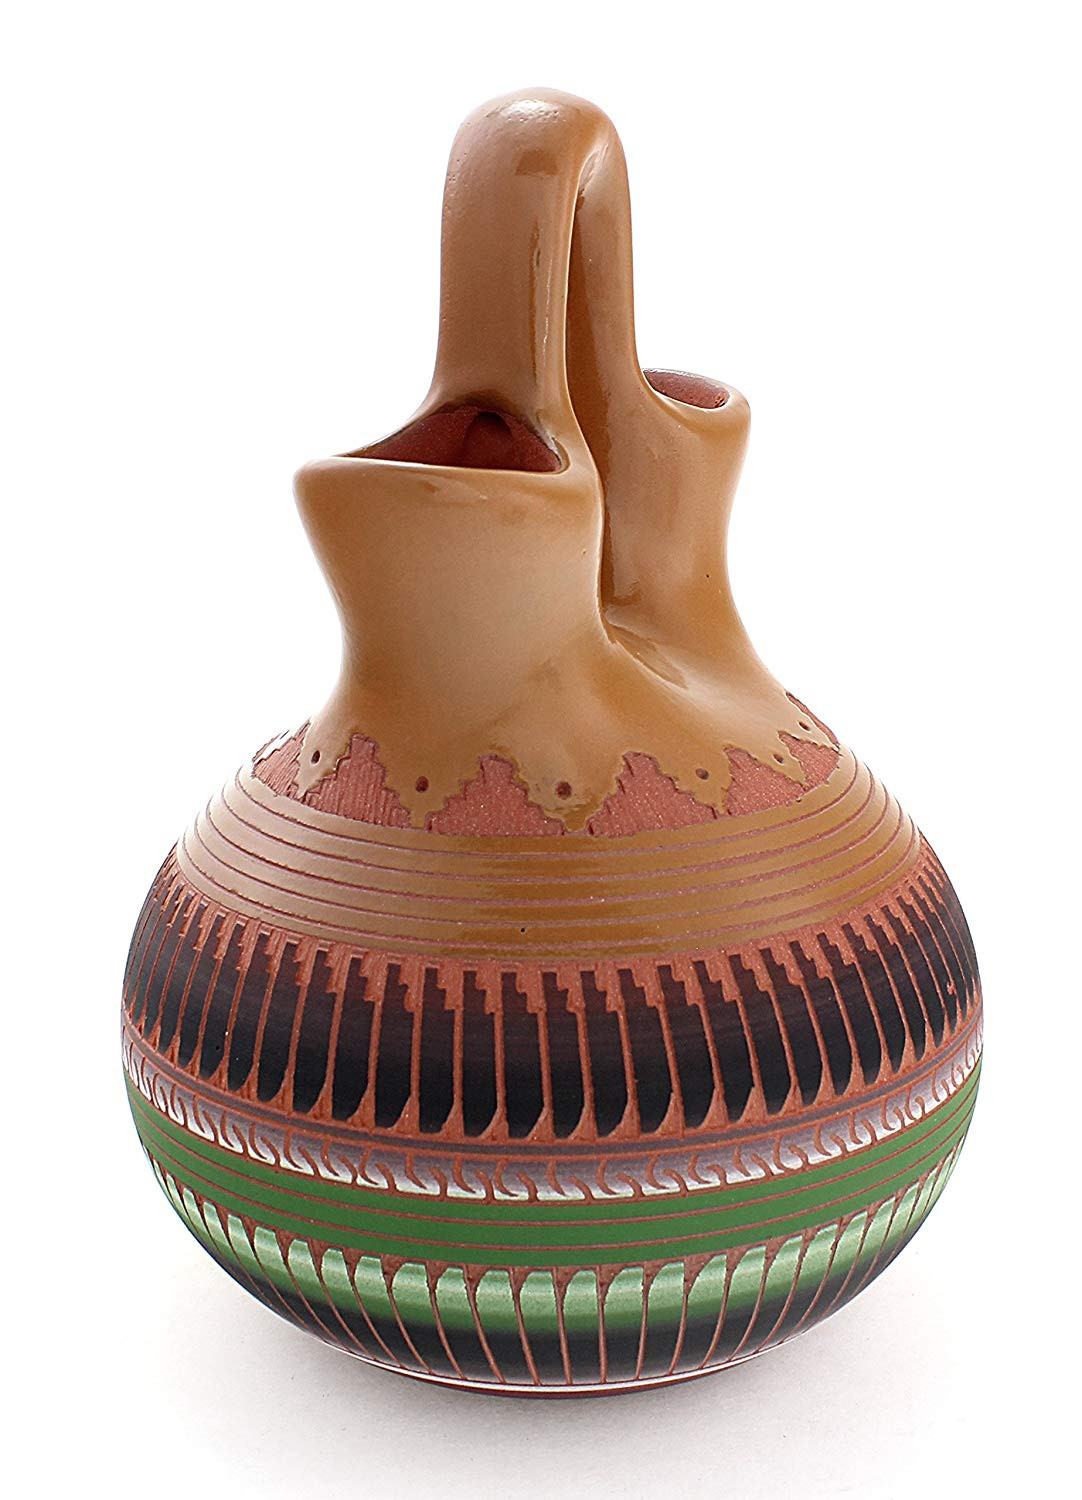 11 Elegant Horsehair Wedding Vase 2022 free download horsehair wedding vase of amazon com navajo indian pottery wedding vase by susie charlie for amazon com navajo indian pottery wedding vase by susie charlie home kitchen